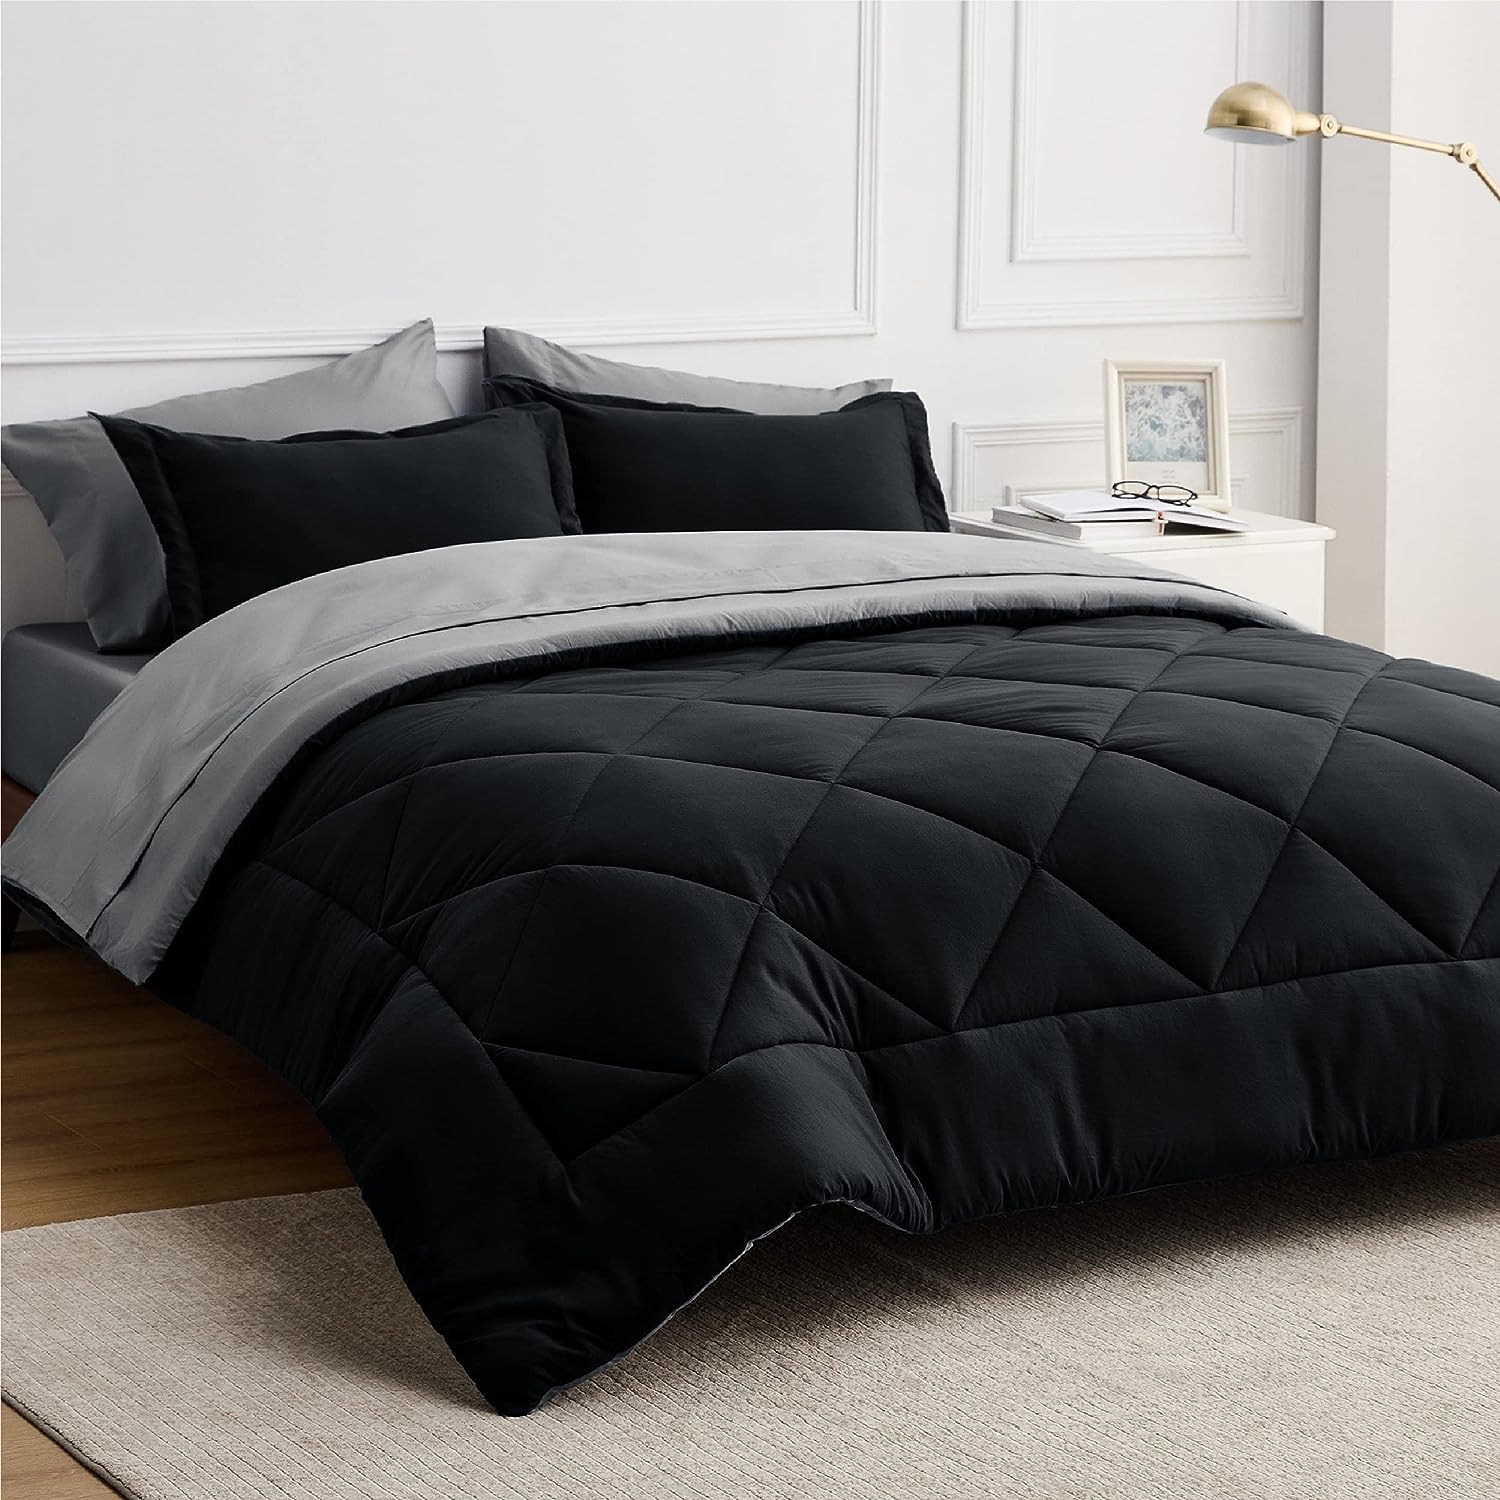 Bedsure Black Twin Comforter Set 5 Pieces